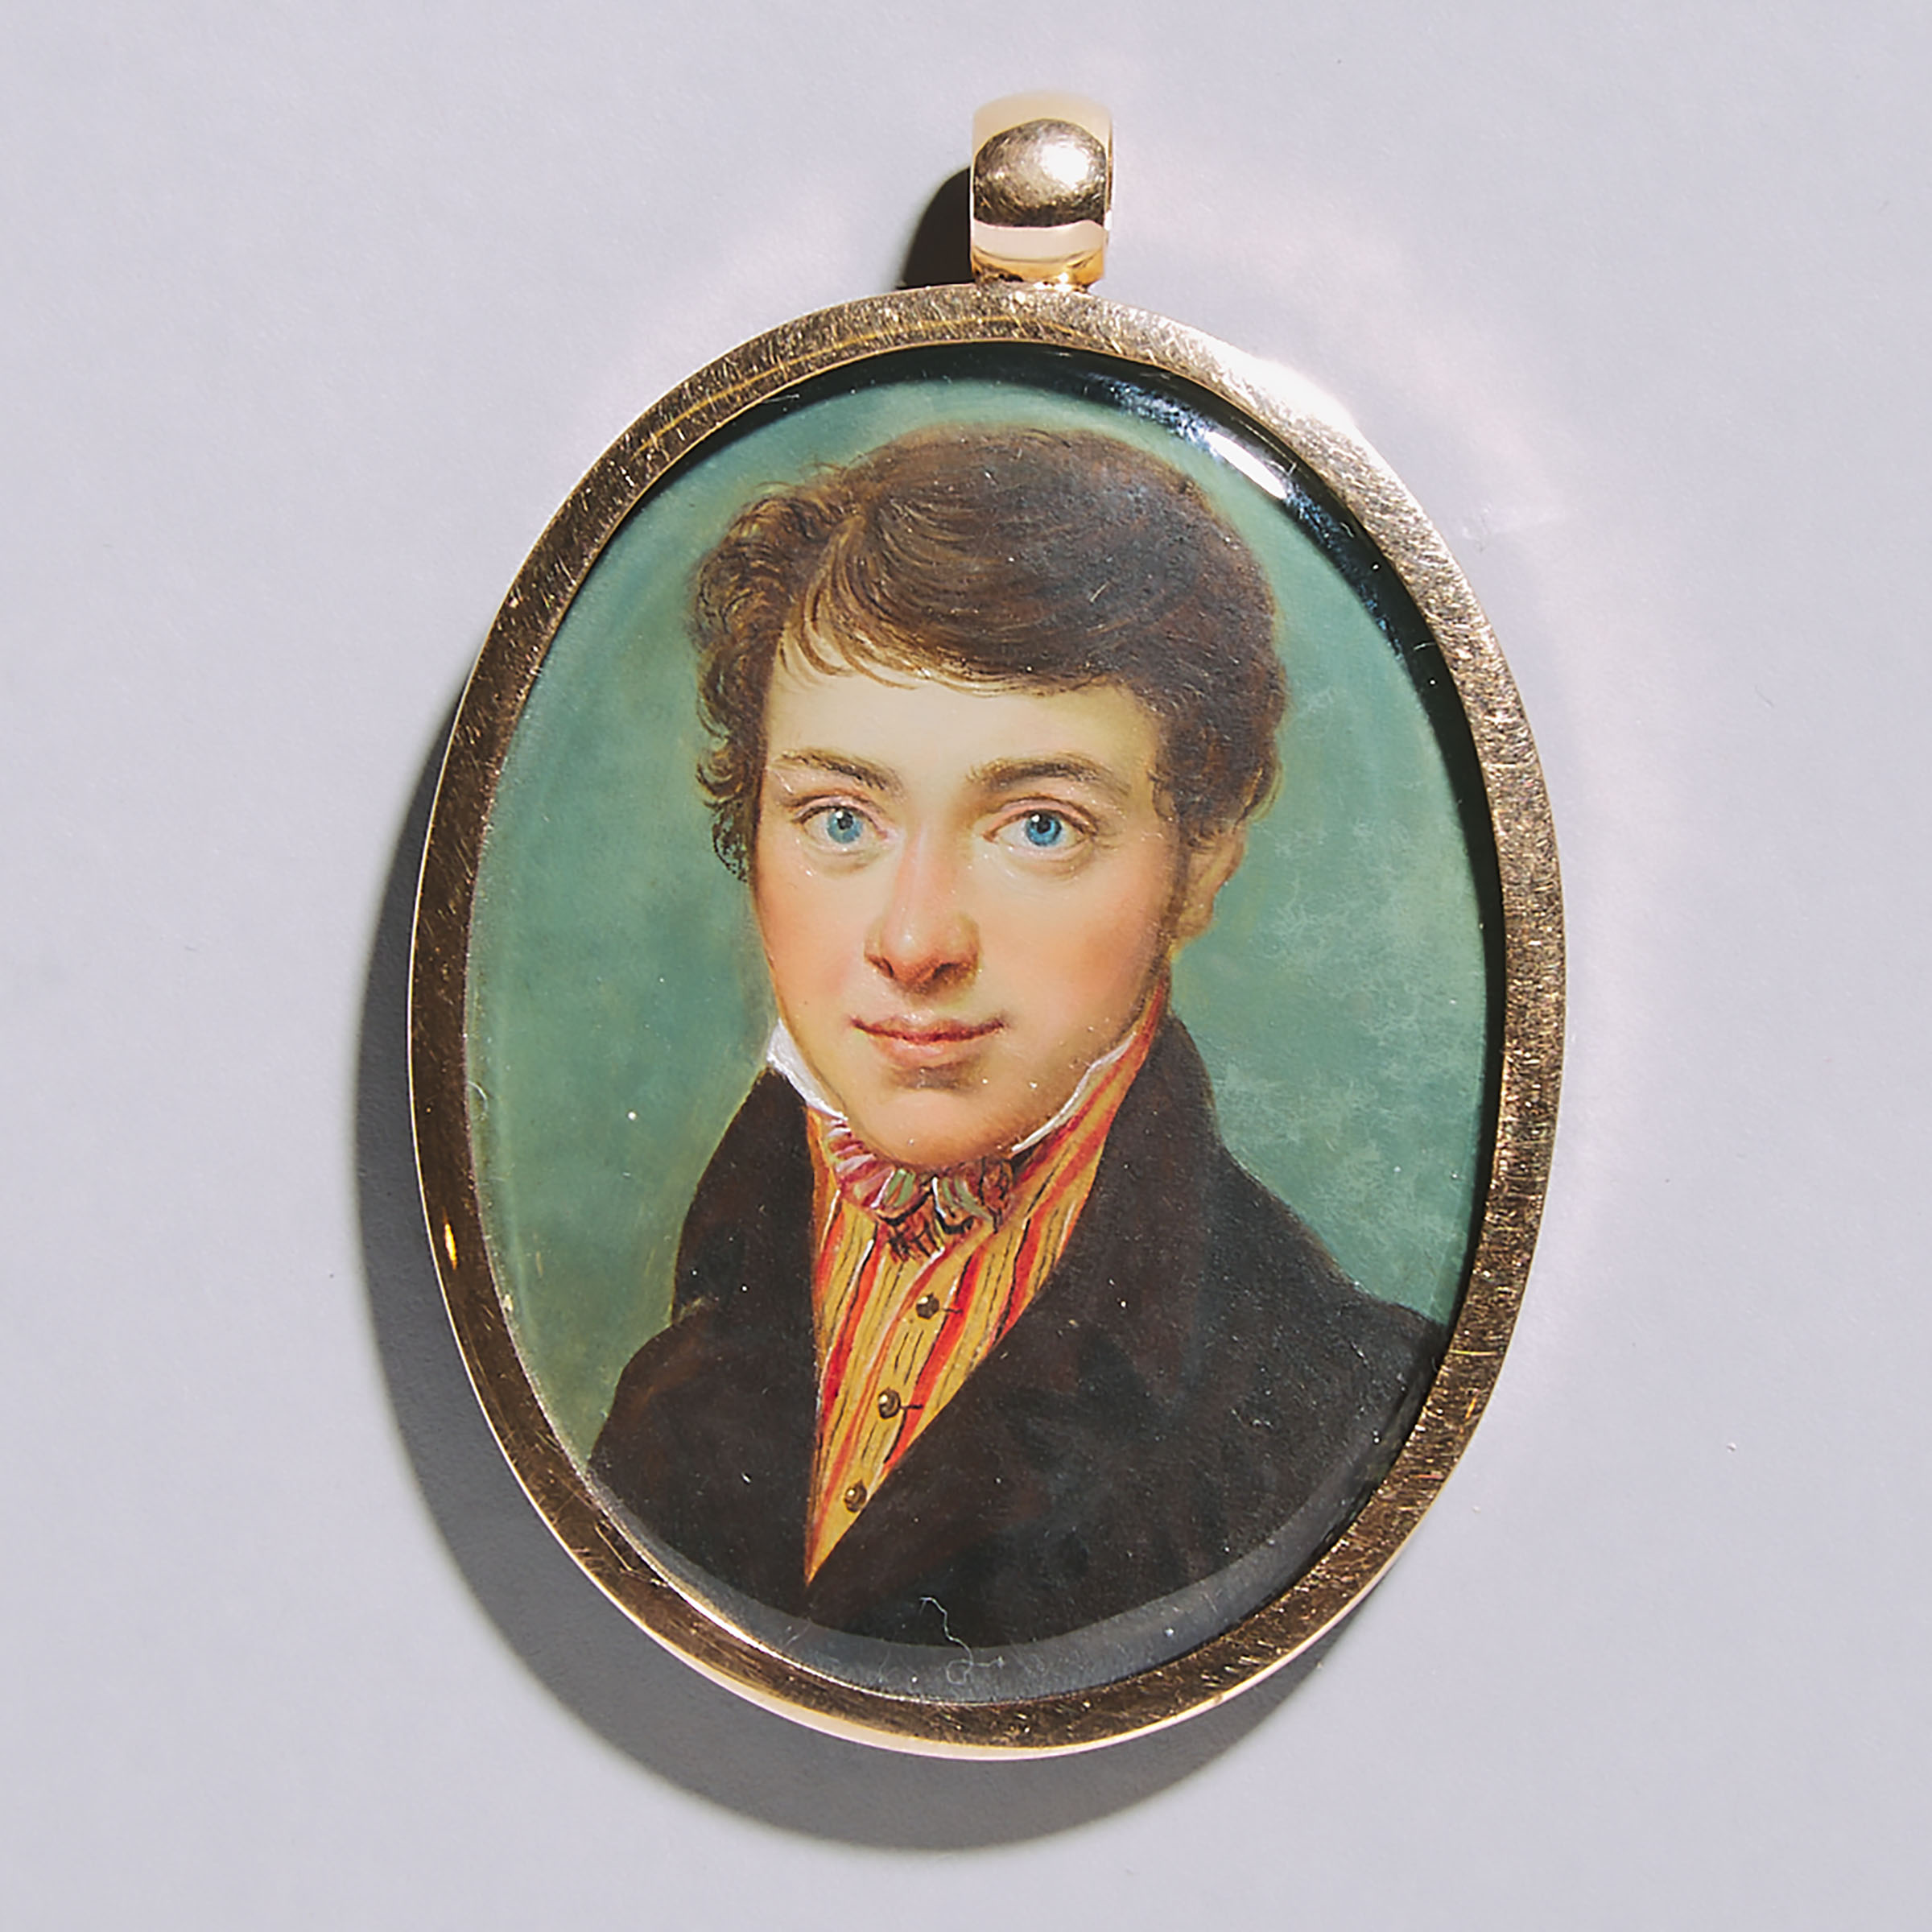 Portrait Miniature of a Young Gentleman, c.1840